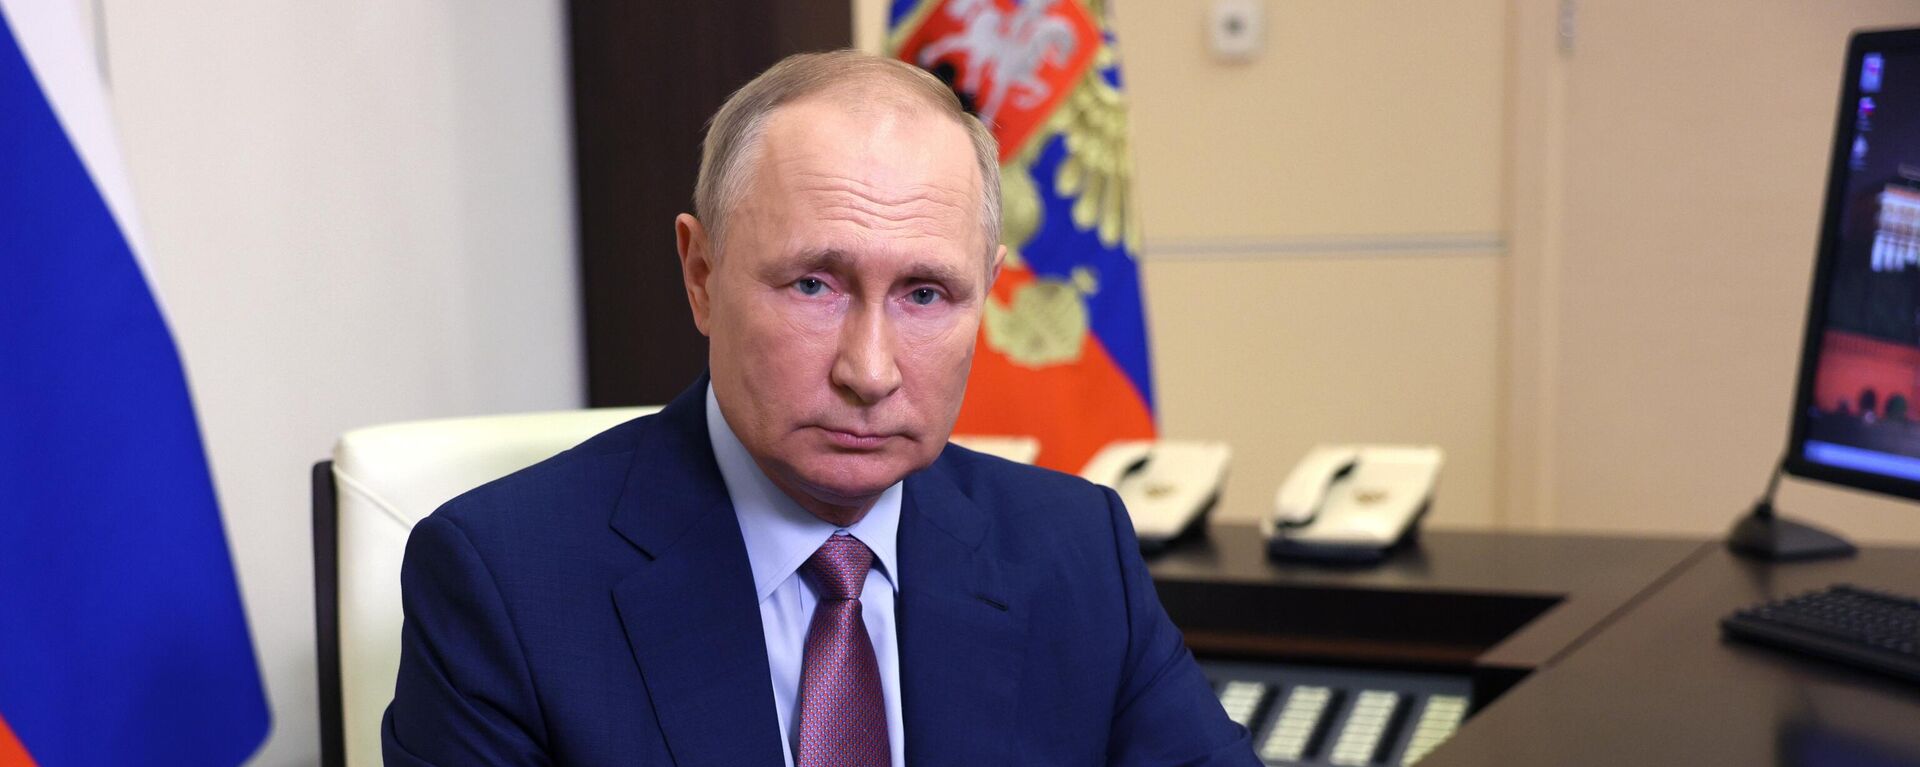 El presidente ruso Vladímir Putin - Sputnik Mundo, 1920, 16.09.2022